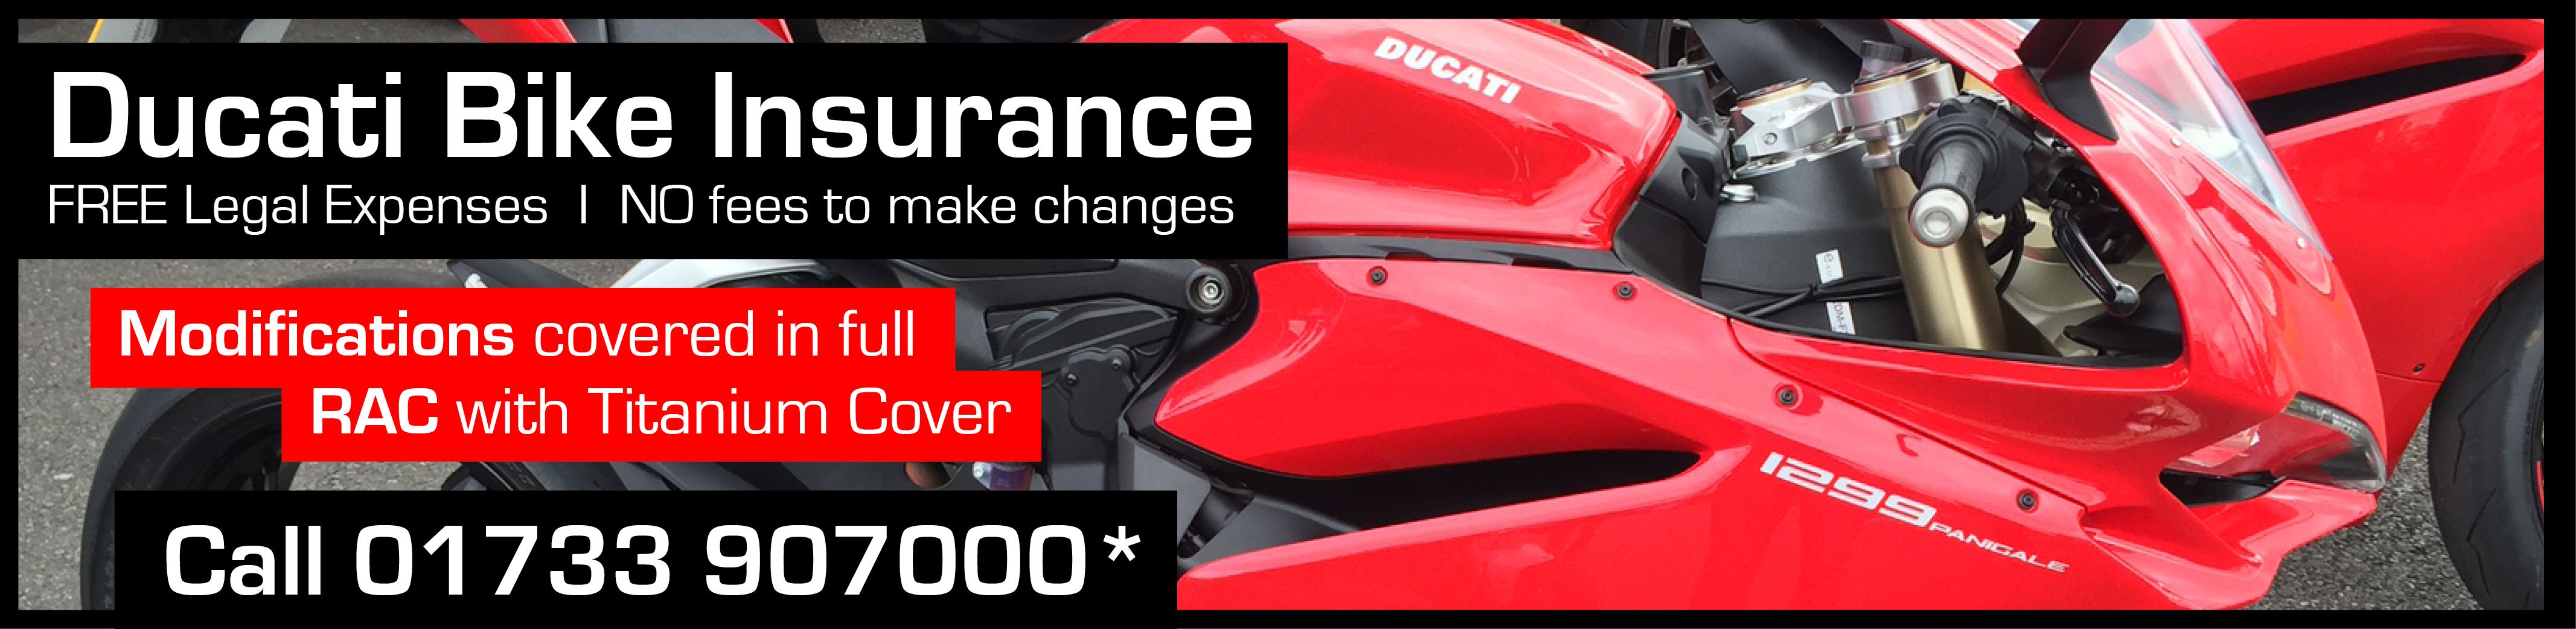 ducati-motorcycle-insurance